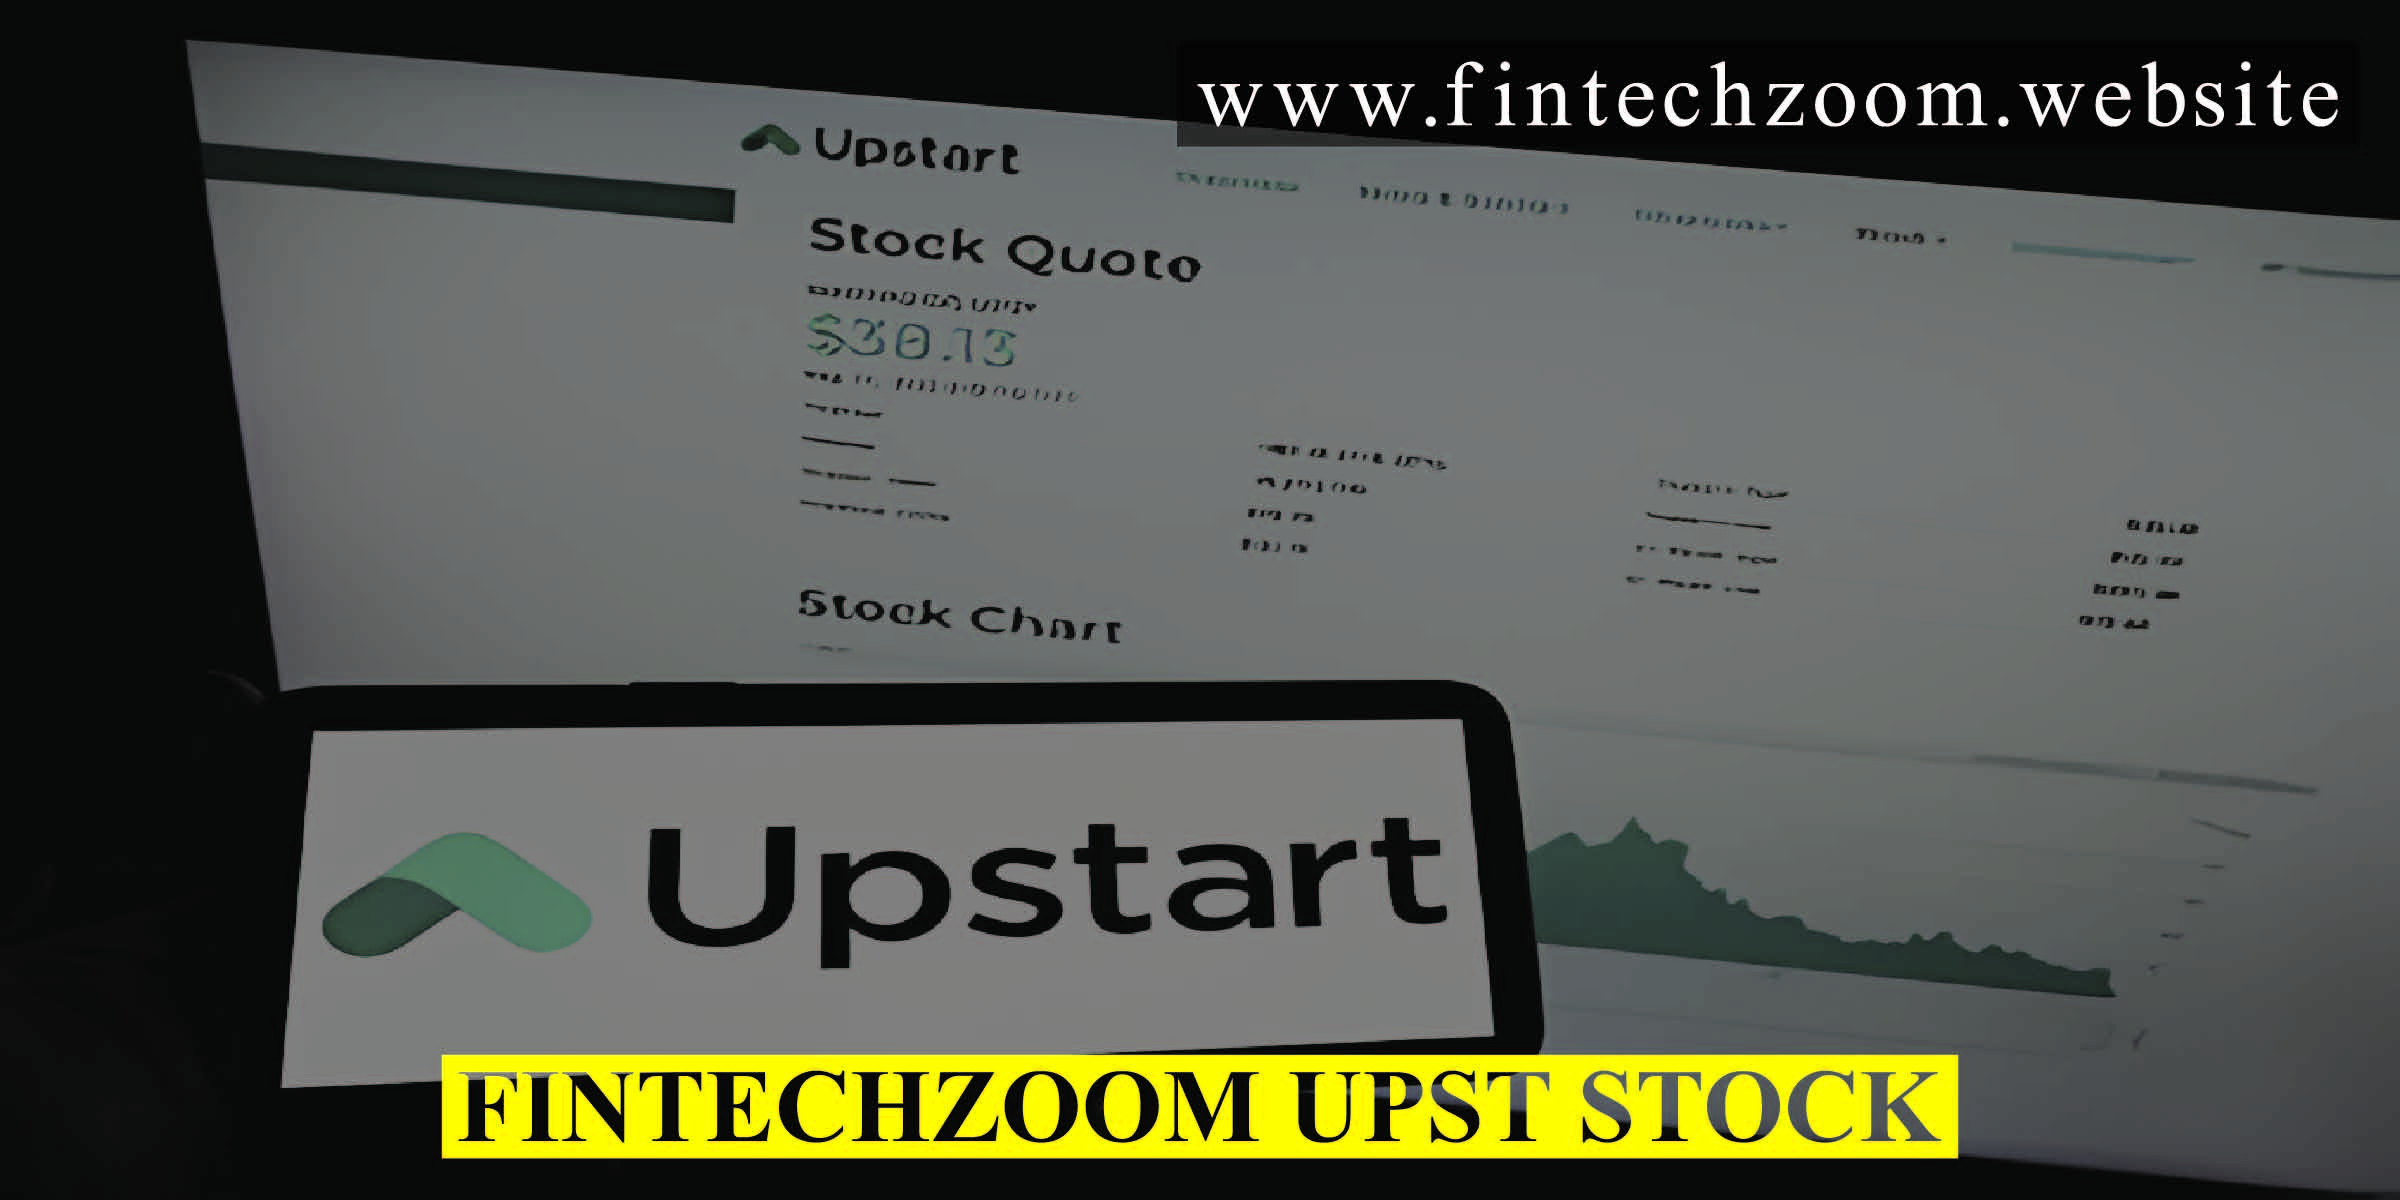 Fintechzoom UPST stock